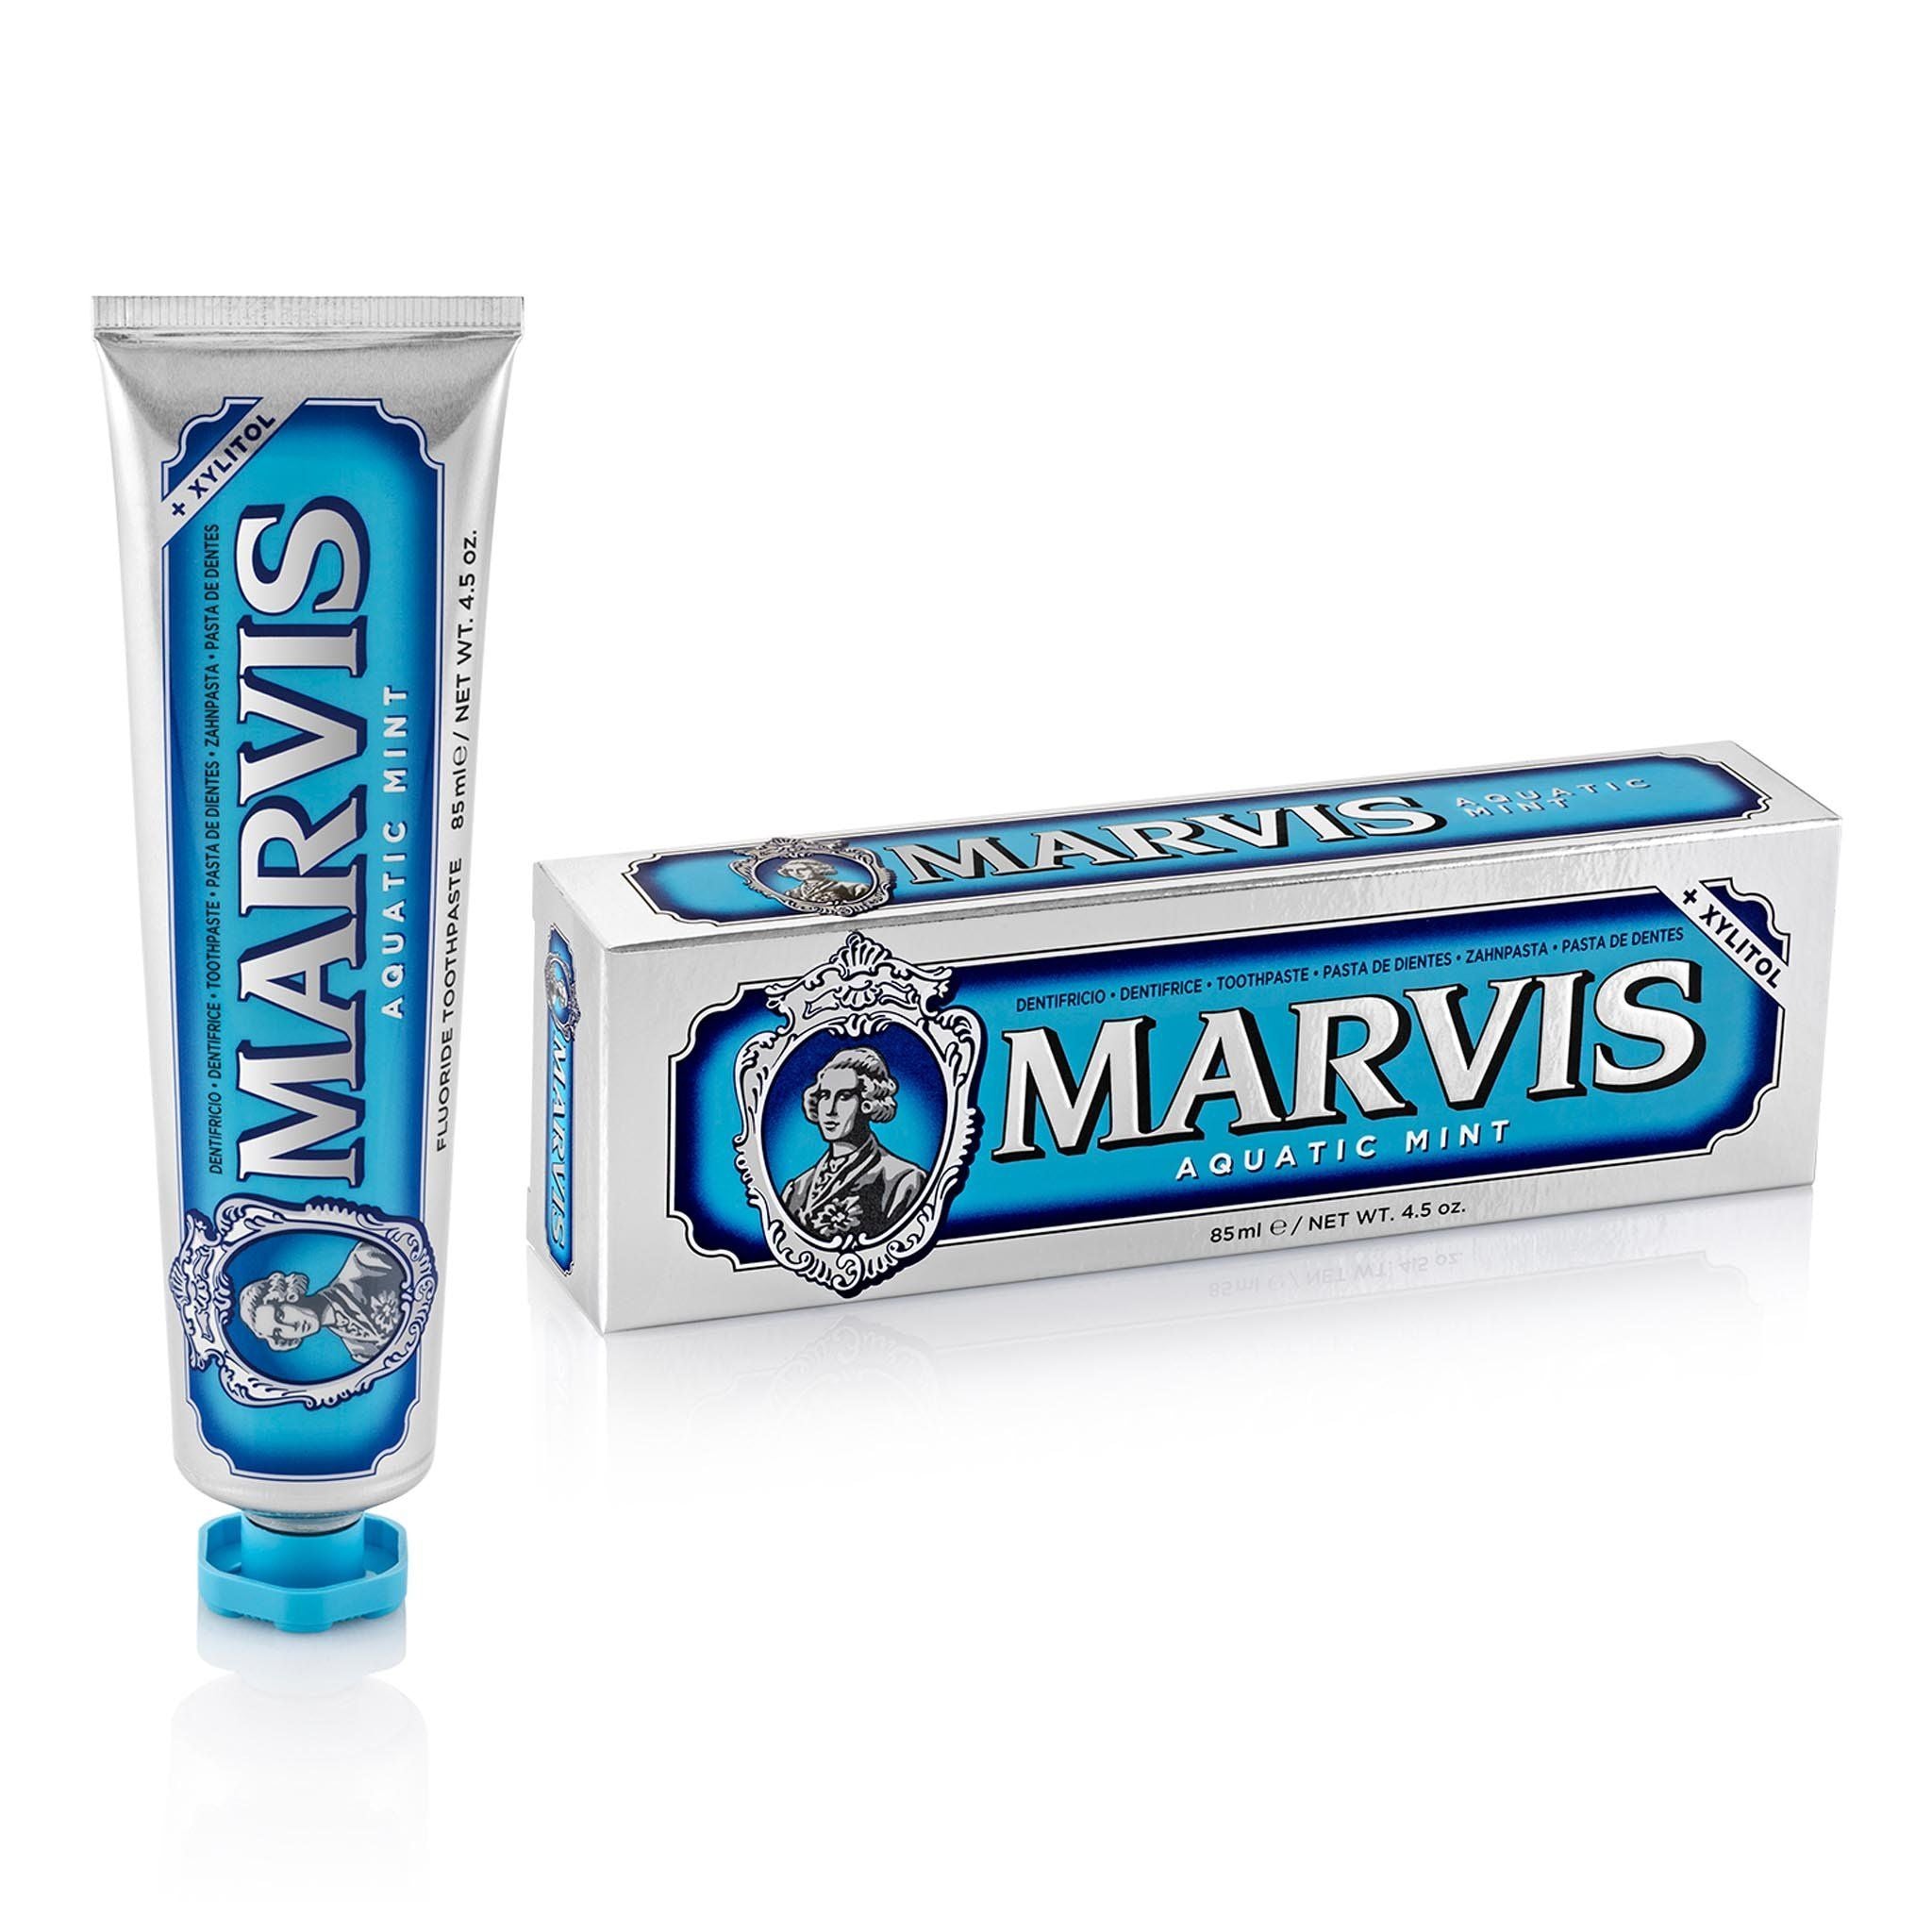 Marvis tannkrem - Aquatic Mint 10 ml